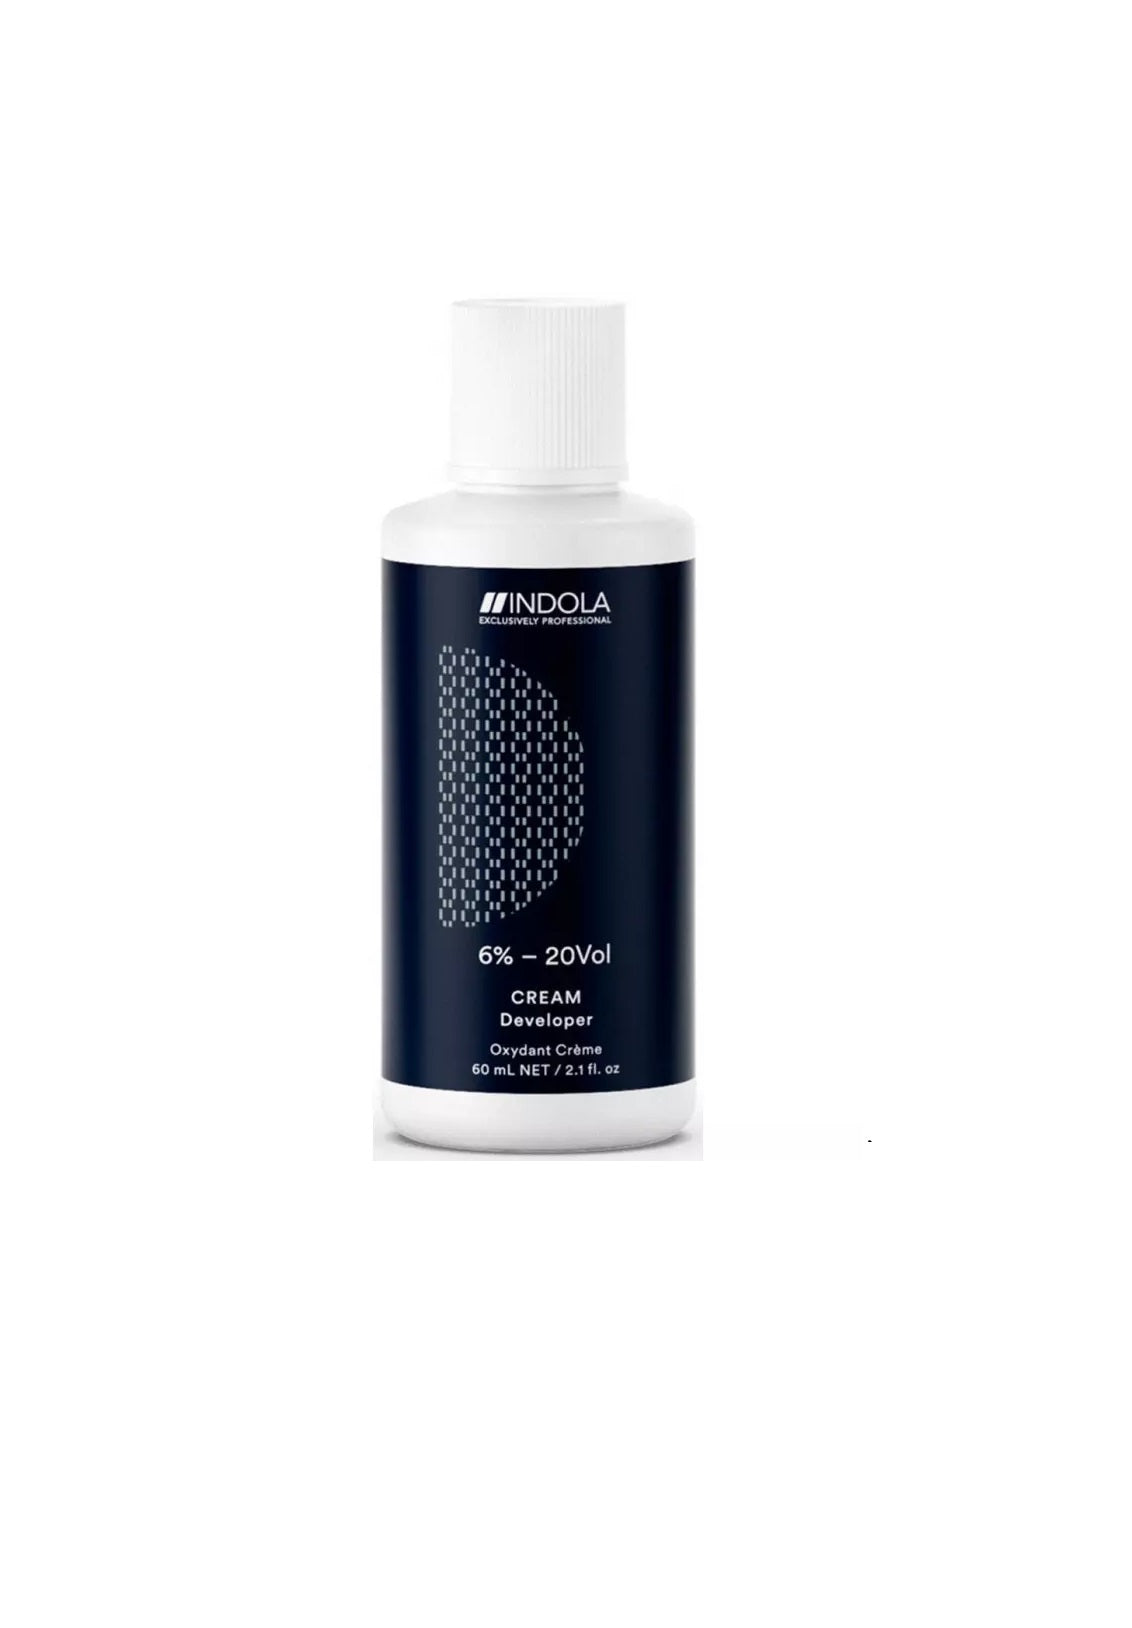 Indola Blond Expert Crema Oxidanta 6% 20vol 60ml